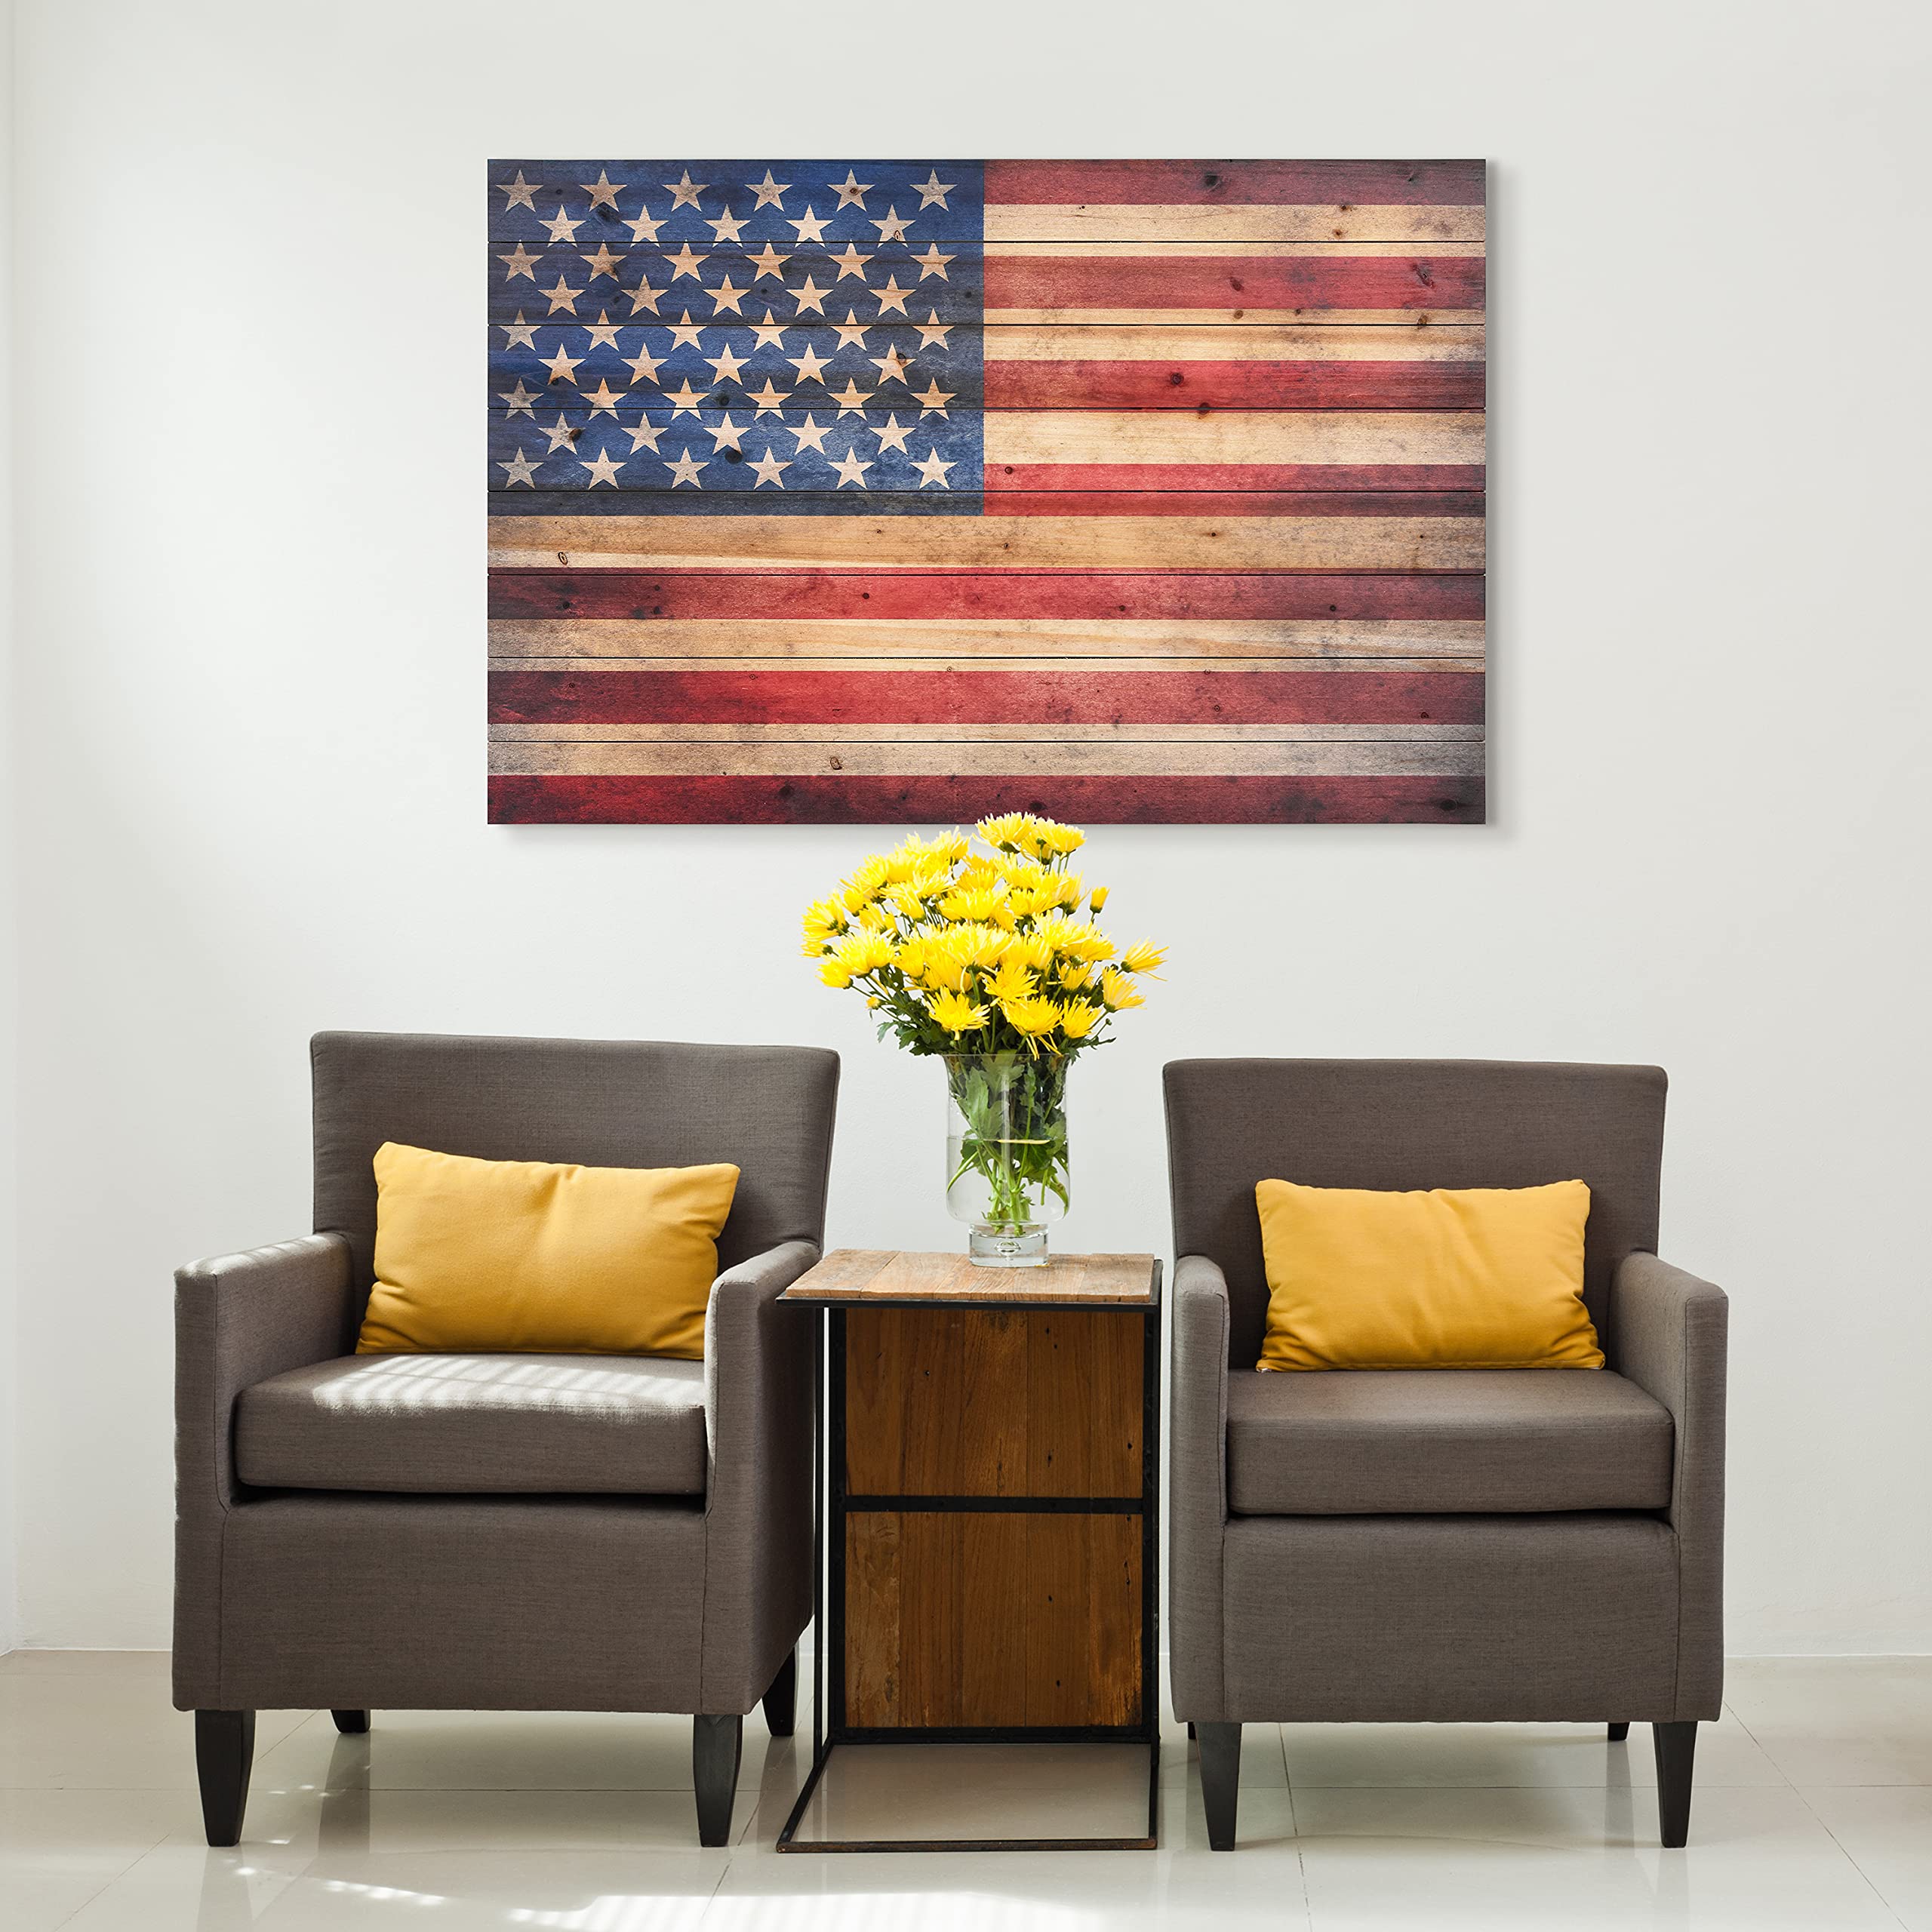 Empire Art Direct American Flag Digital Print on Solid Wood Wall Art, 30